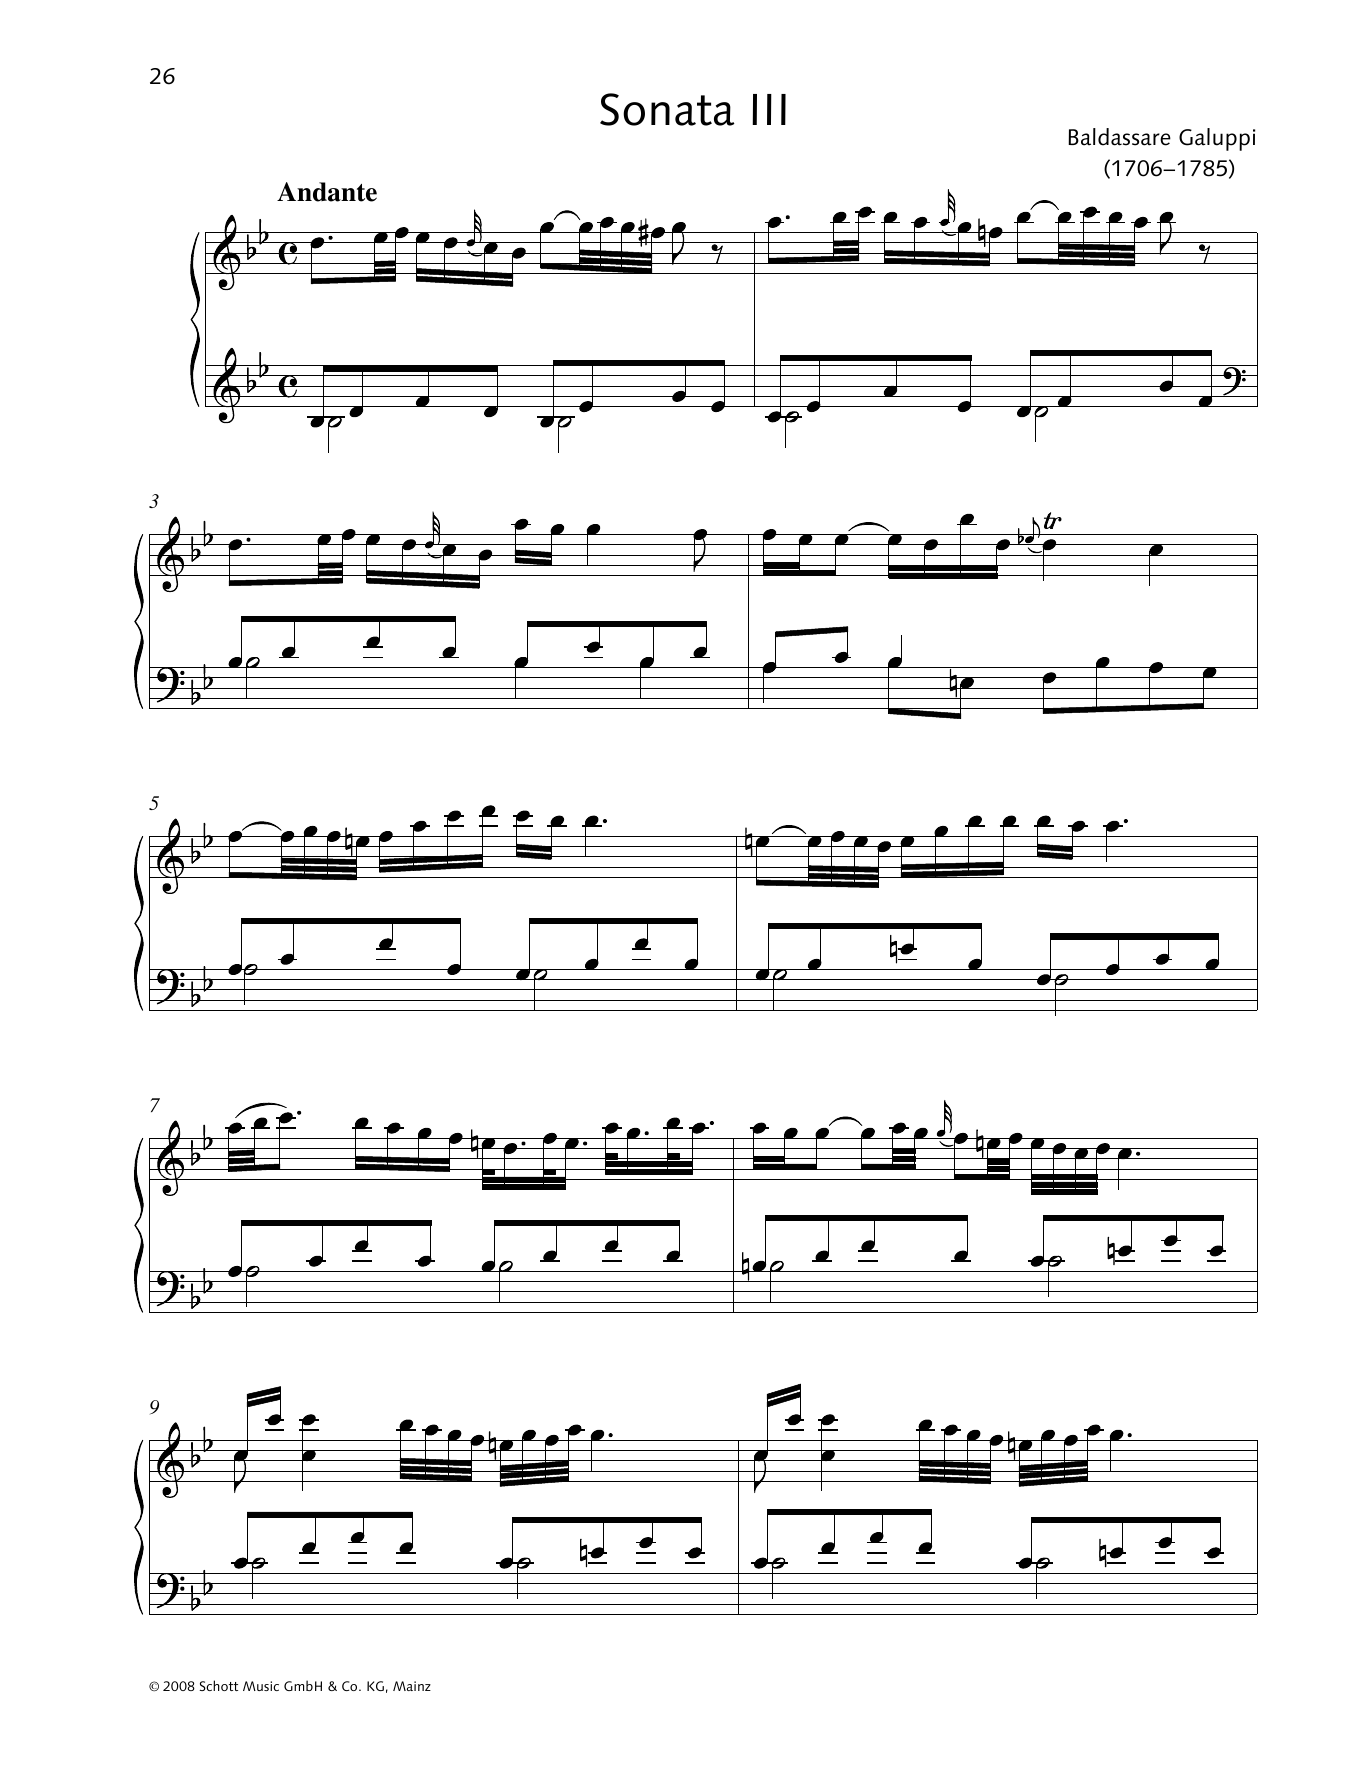 Baldassare Galuppi Sonata III B-flat major Sheet Music Notes & Chords for Piano Solo - Download or Print PDF